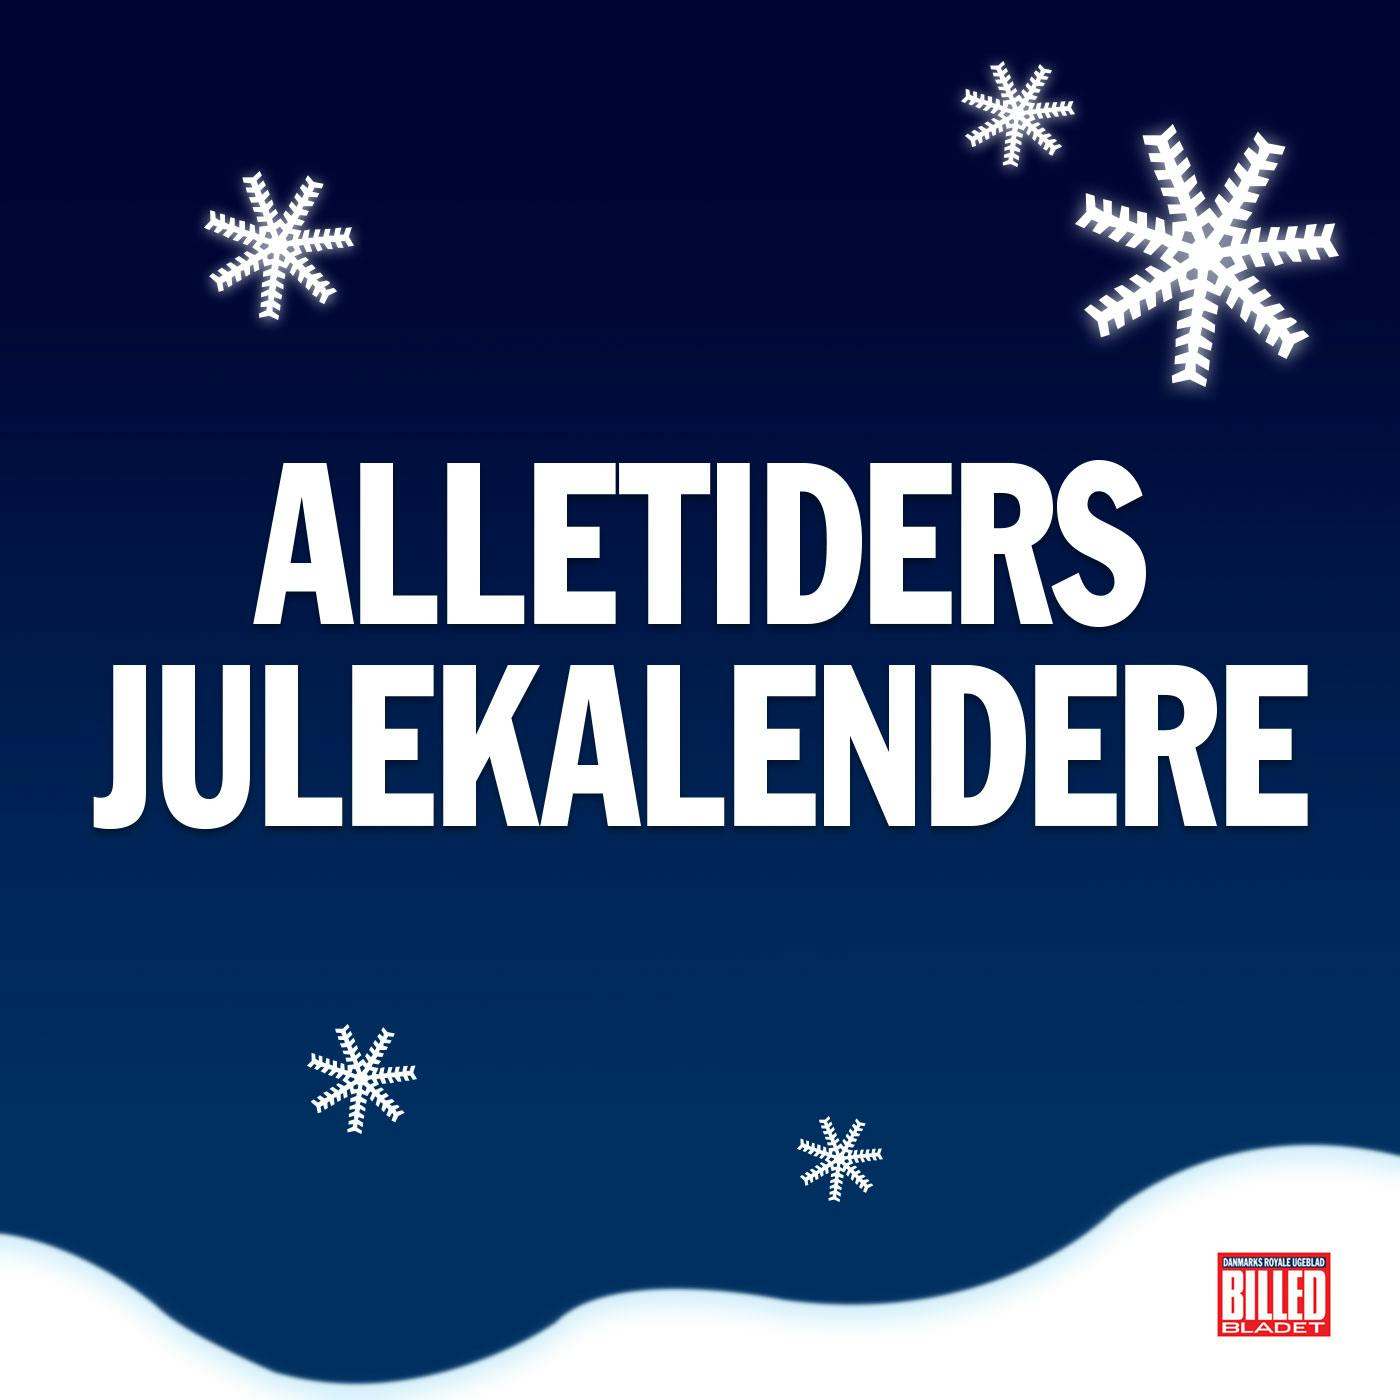 https://imgix.billedbladet.dk/podcast_julekalender_02.jpg